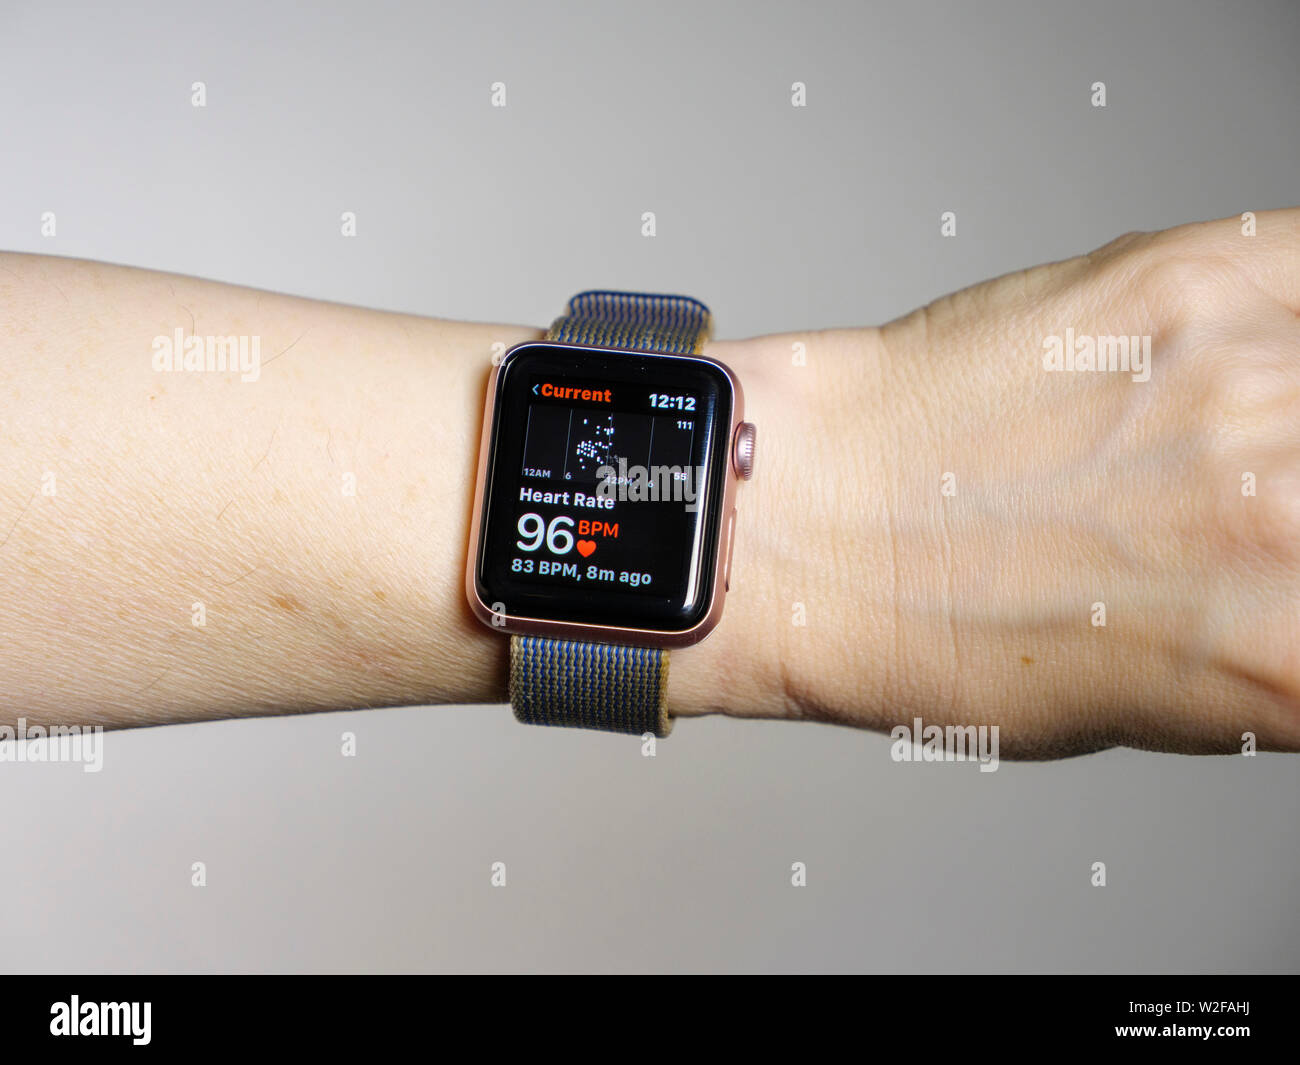 Apple Watch measuring heartbeat showing 96 beats per minute. Stock Photo